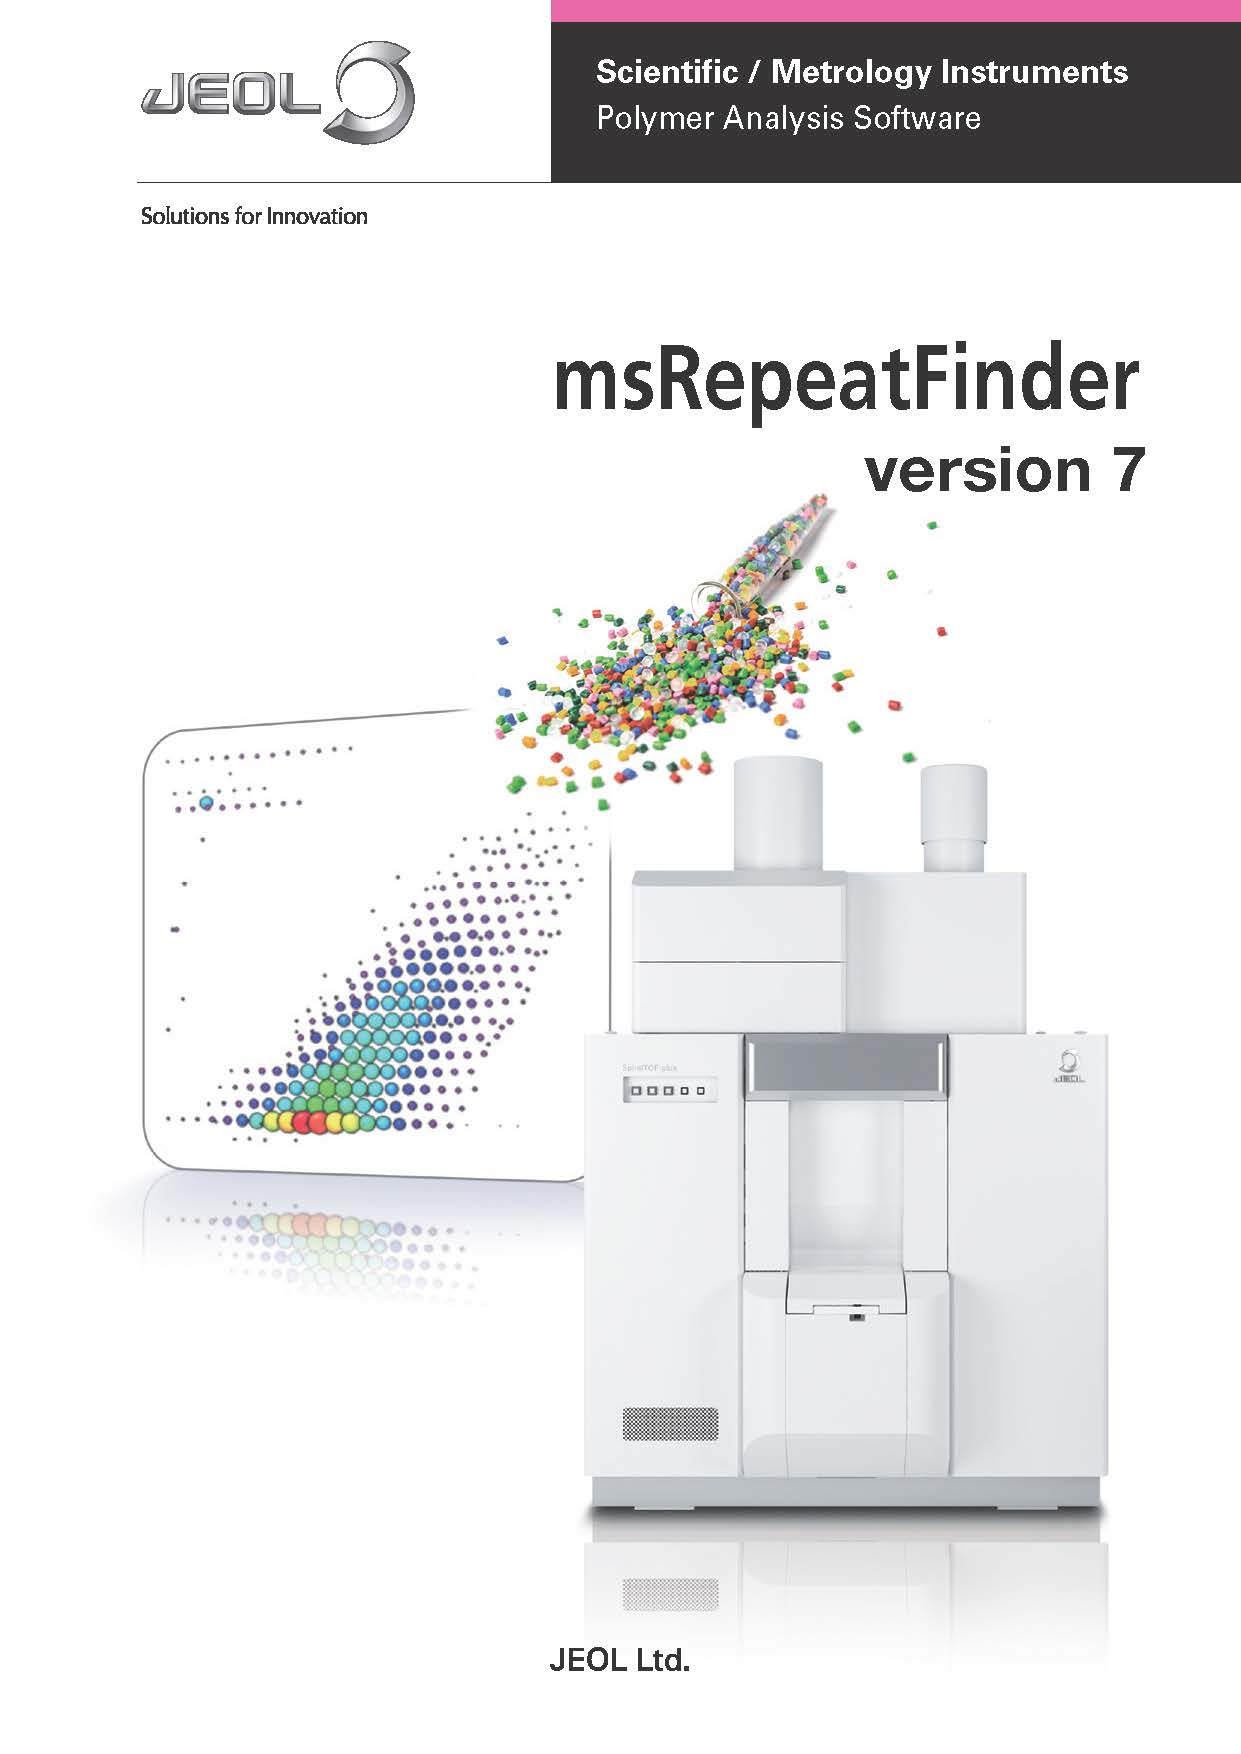 msRepeatFinder Polymer Analysis Software